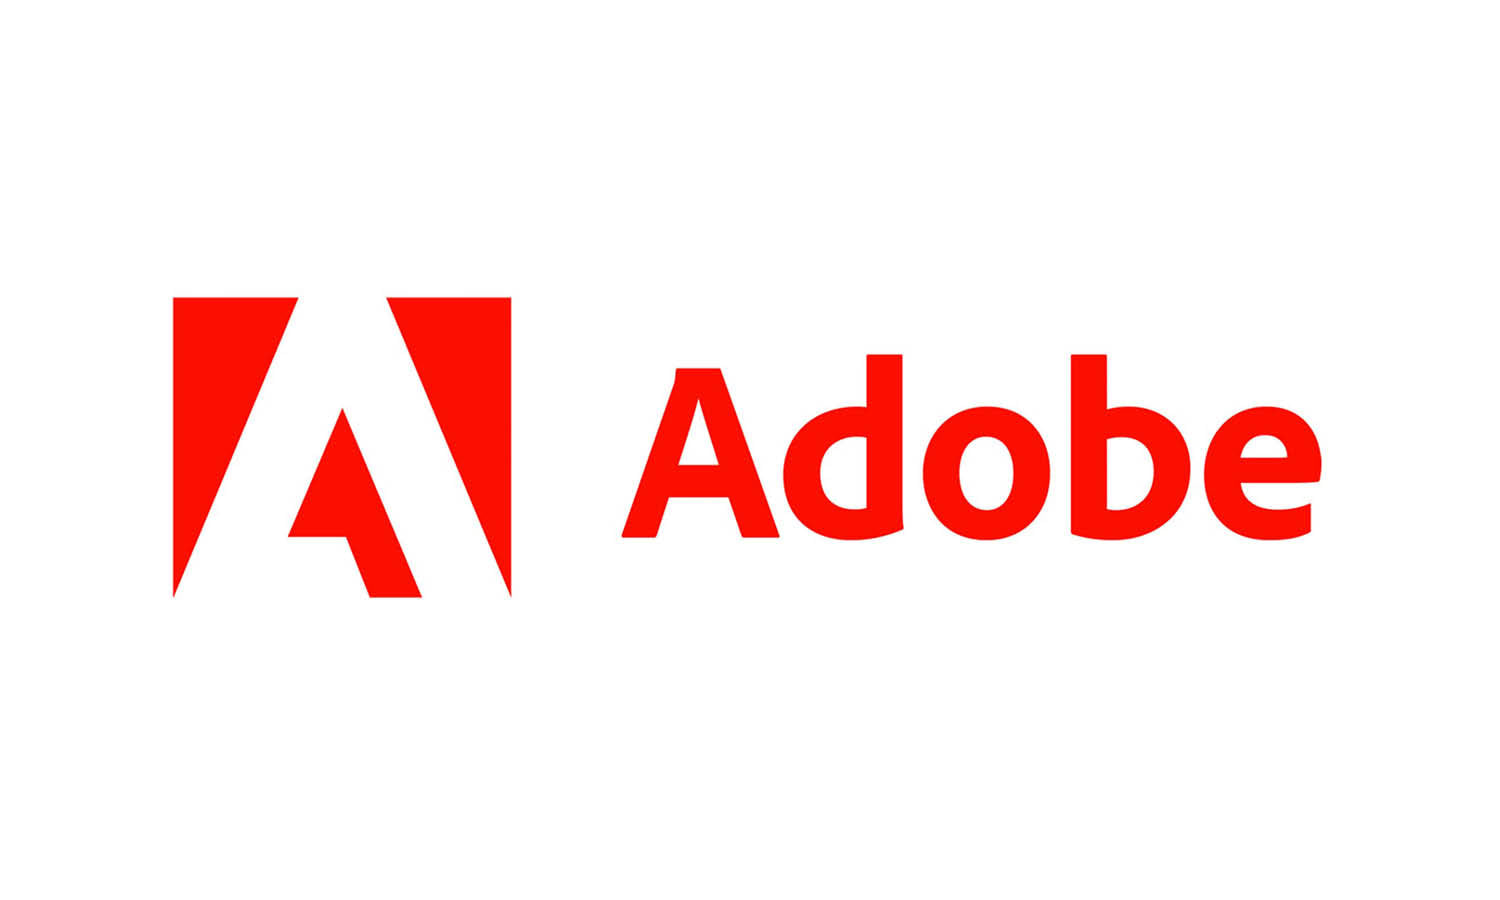 Adobe Logo Design: History & Evolution - Kreafolk